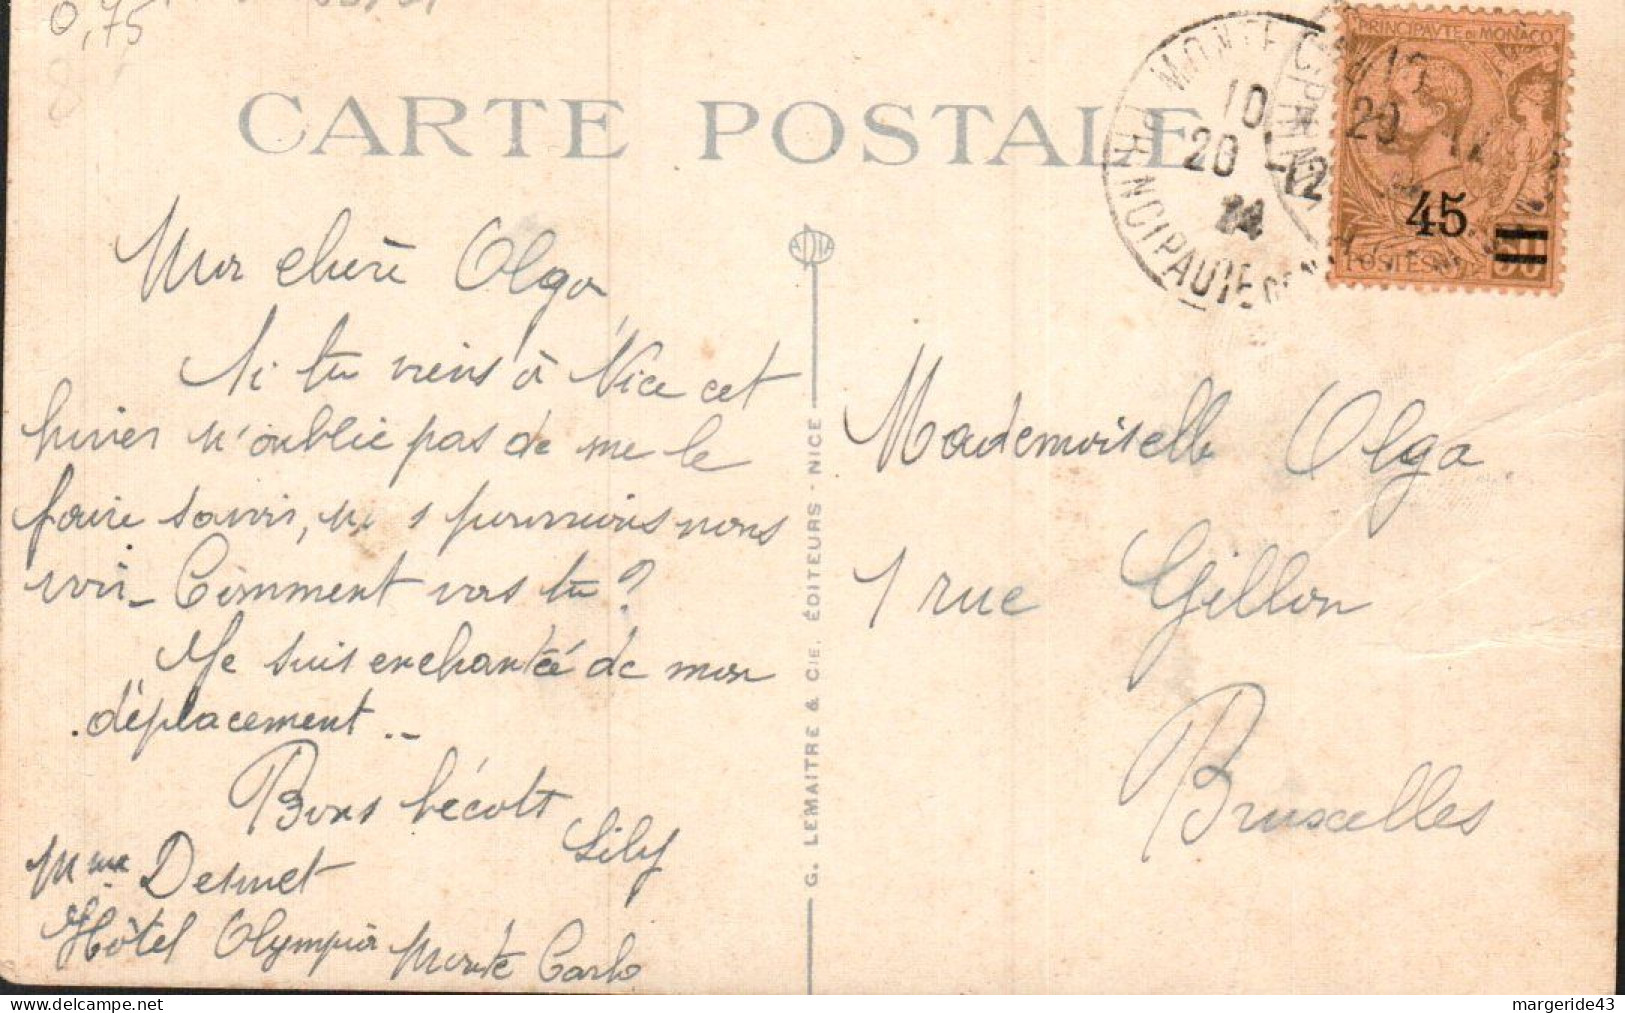 MONACO SEUL SUR CARTEPOUR LA BELGIQUE 1924 - Briefe U. Dokumente